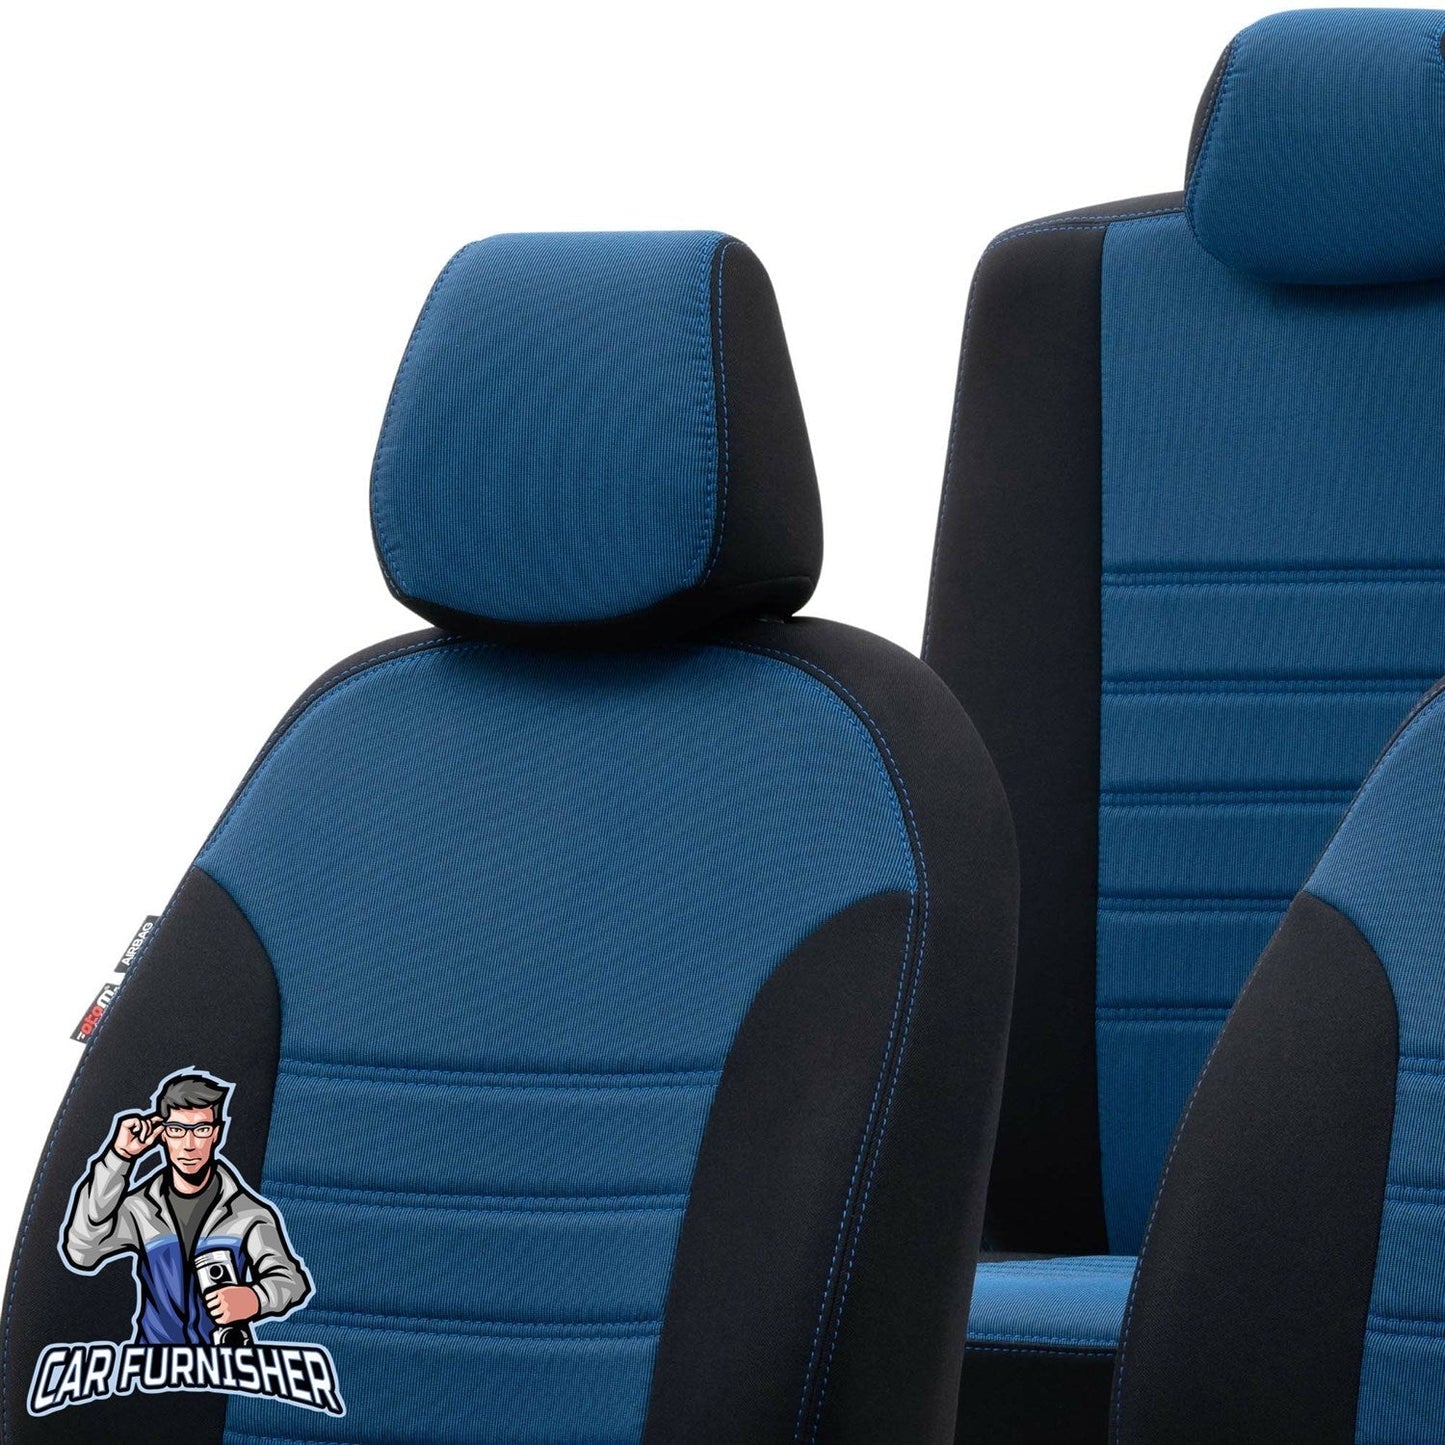 Kia Venga Seat Cover Original Jacquard Design Blue Jacquard Fabric